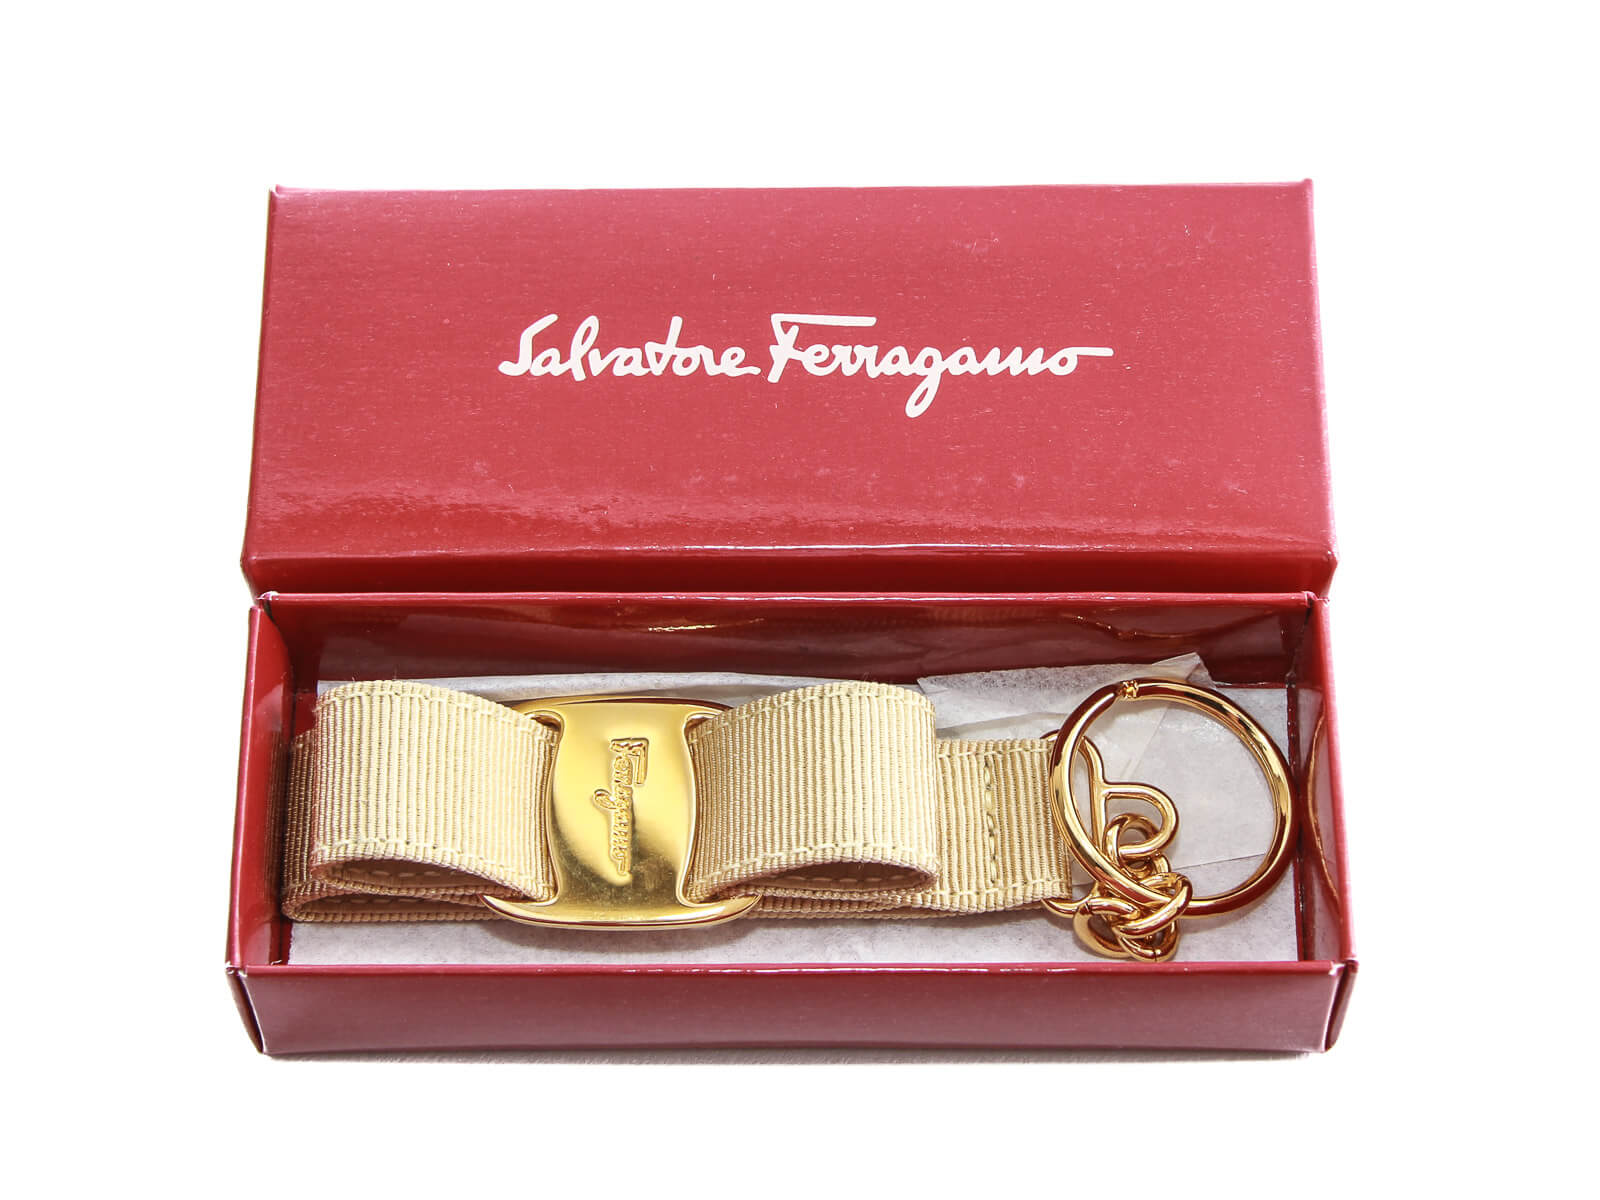 Authentic Salvatore Ferragamo Key ring Charm Yellow